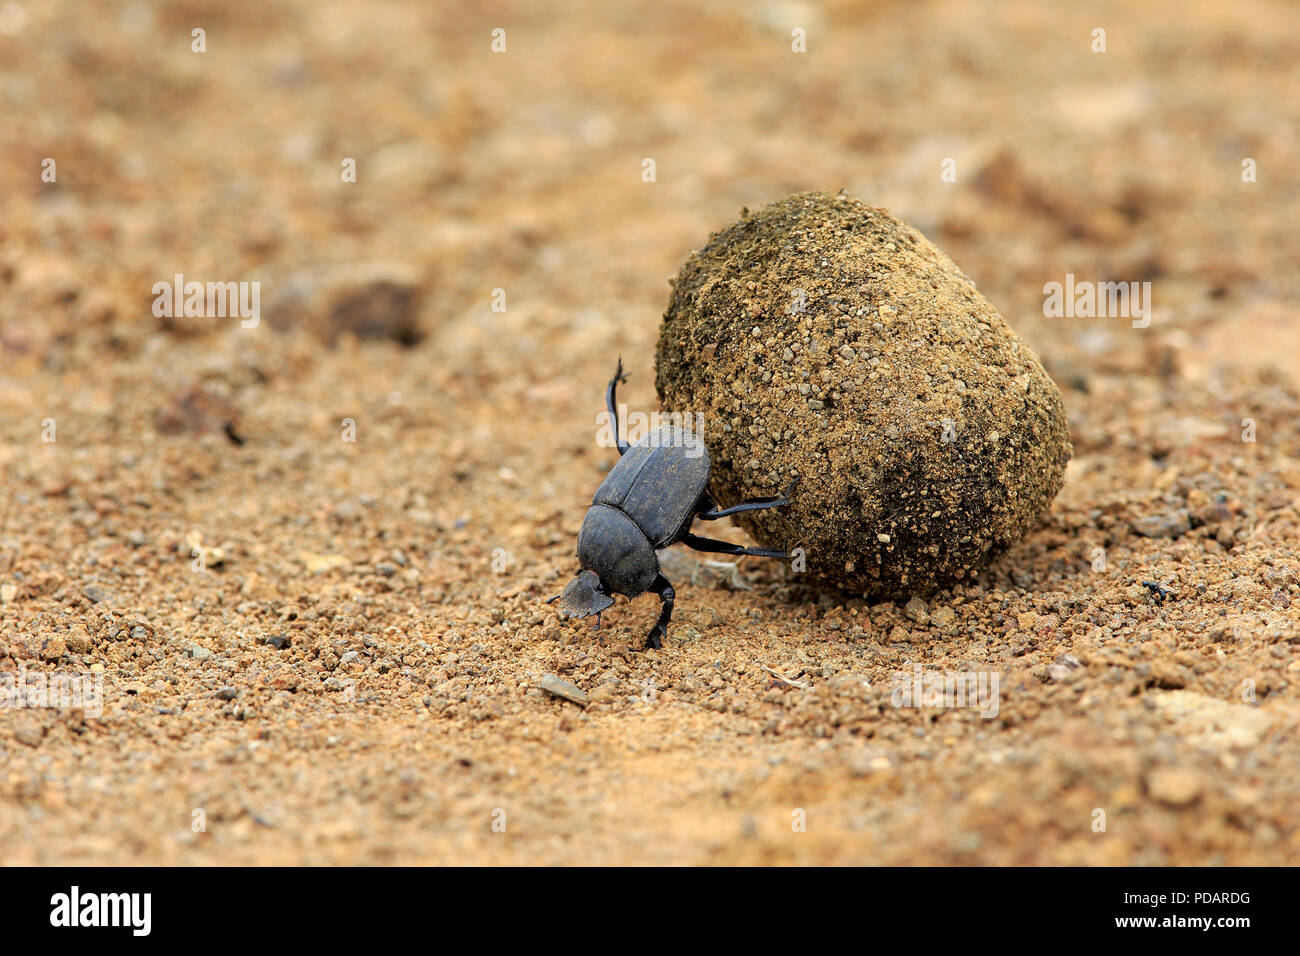 Dung Beetle, adult rolls elephant dung for egg deposition, Isimangaliso Wetland Park, Kwazulu Natal, South Africa, Africa, Scarabaeus sacer Stock Photo